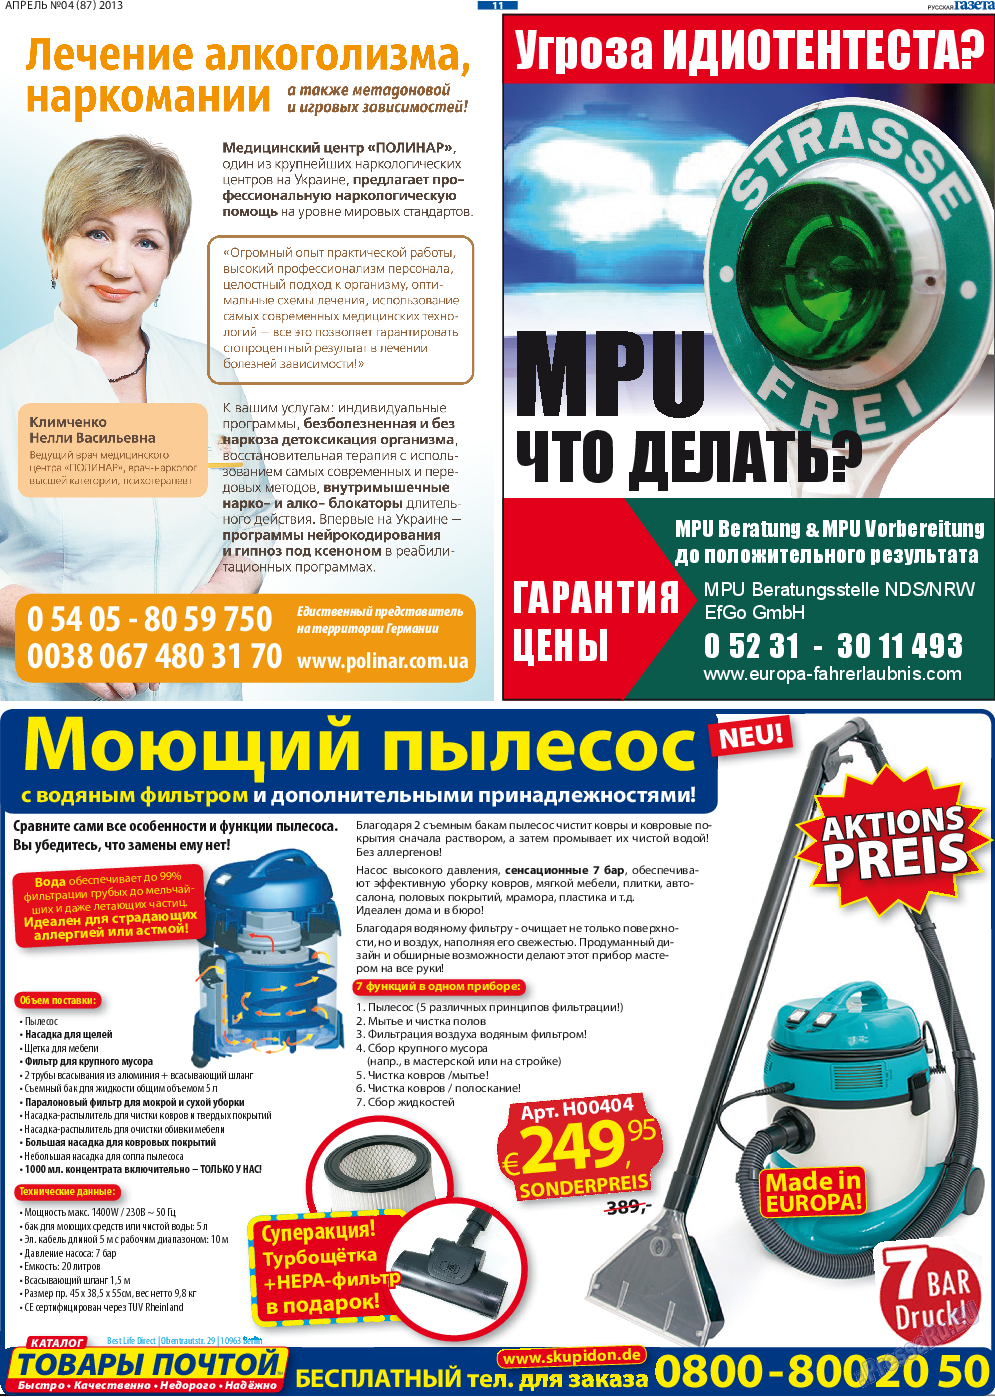 Русская Газета, газета. 2013 №4 стр.11